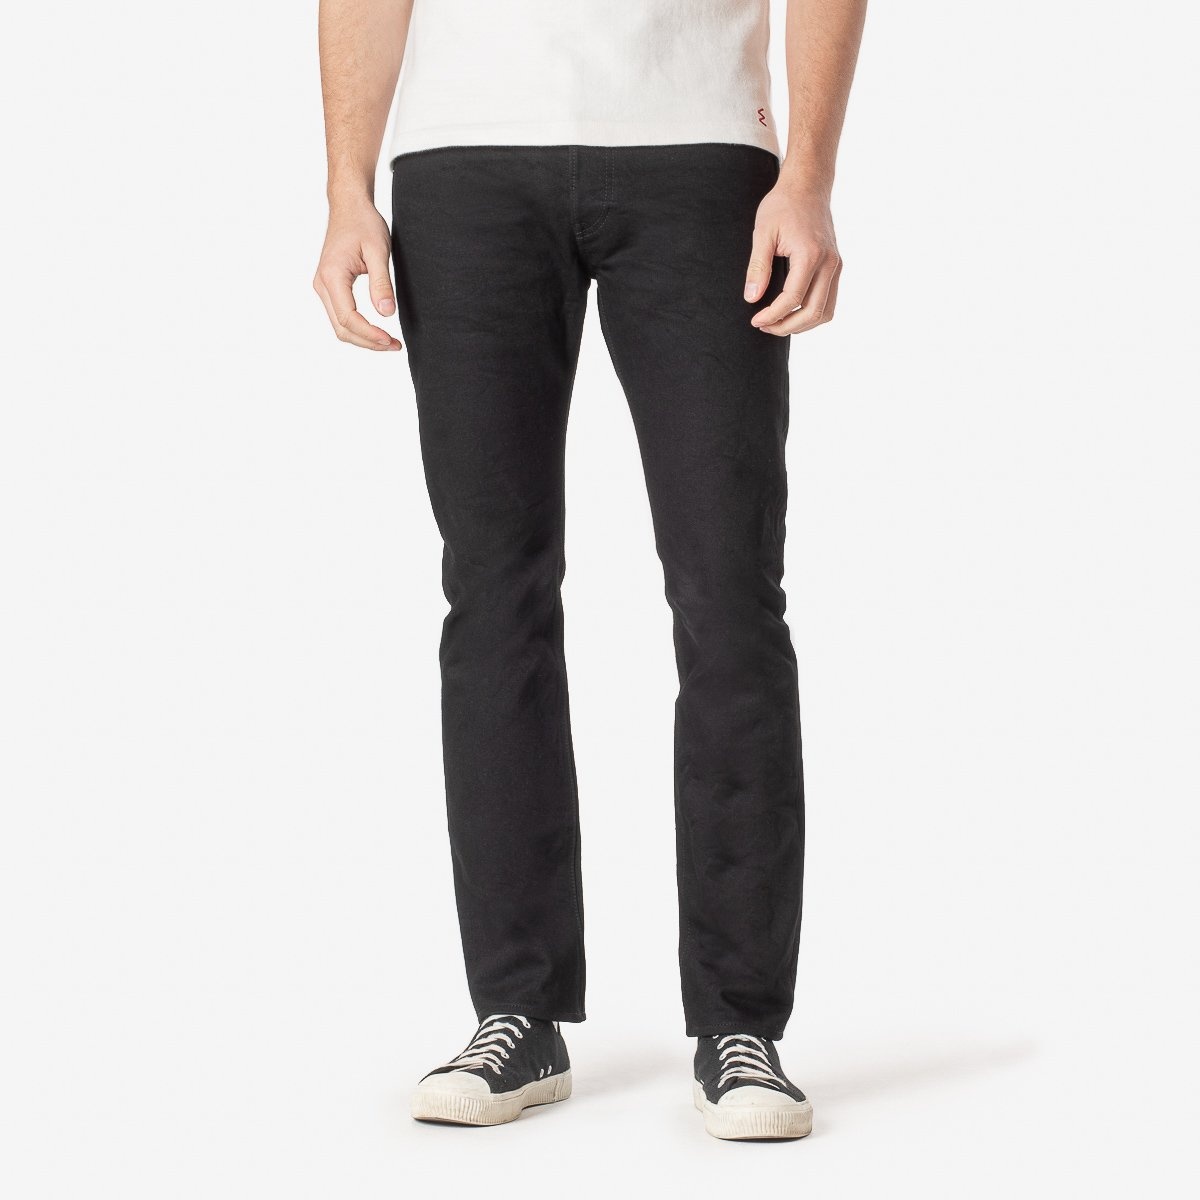 IH-555S-142bb 14oz Selvedge Denim Super Slim Cut Jeans - Black/Black - 2